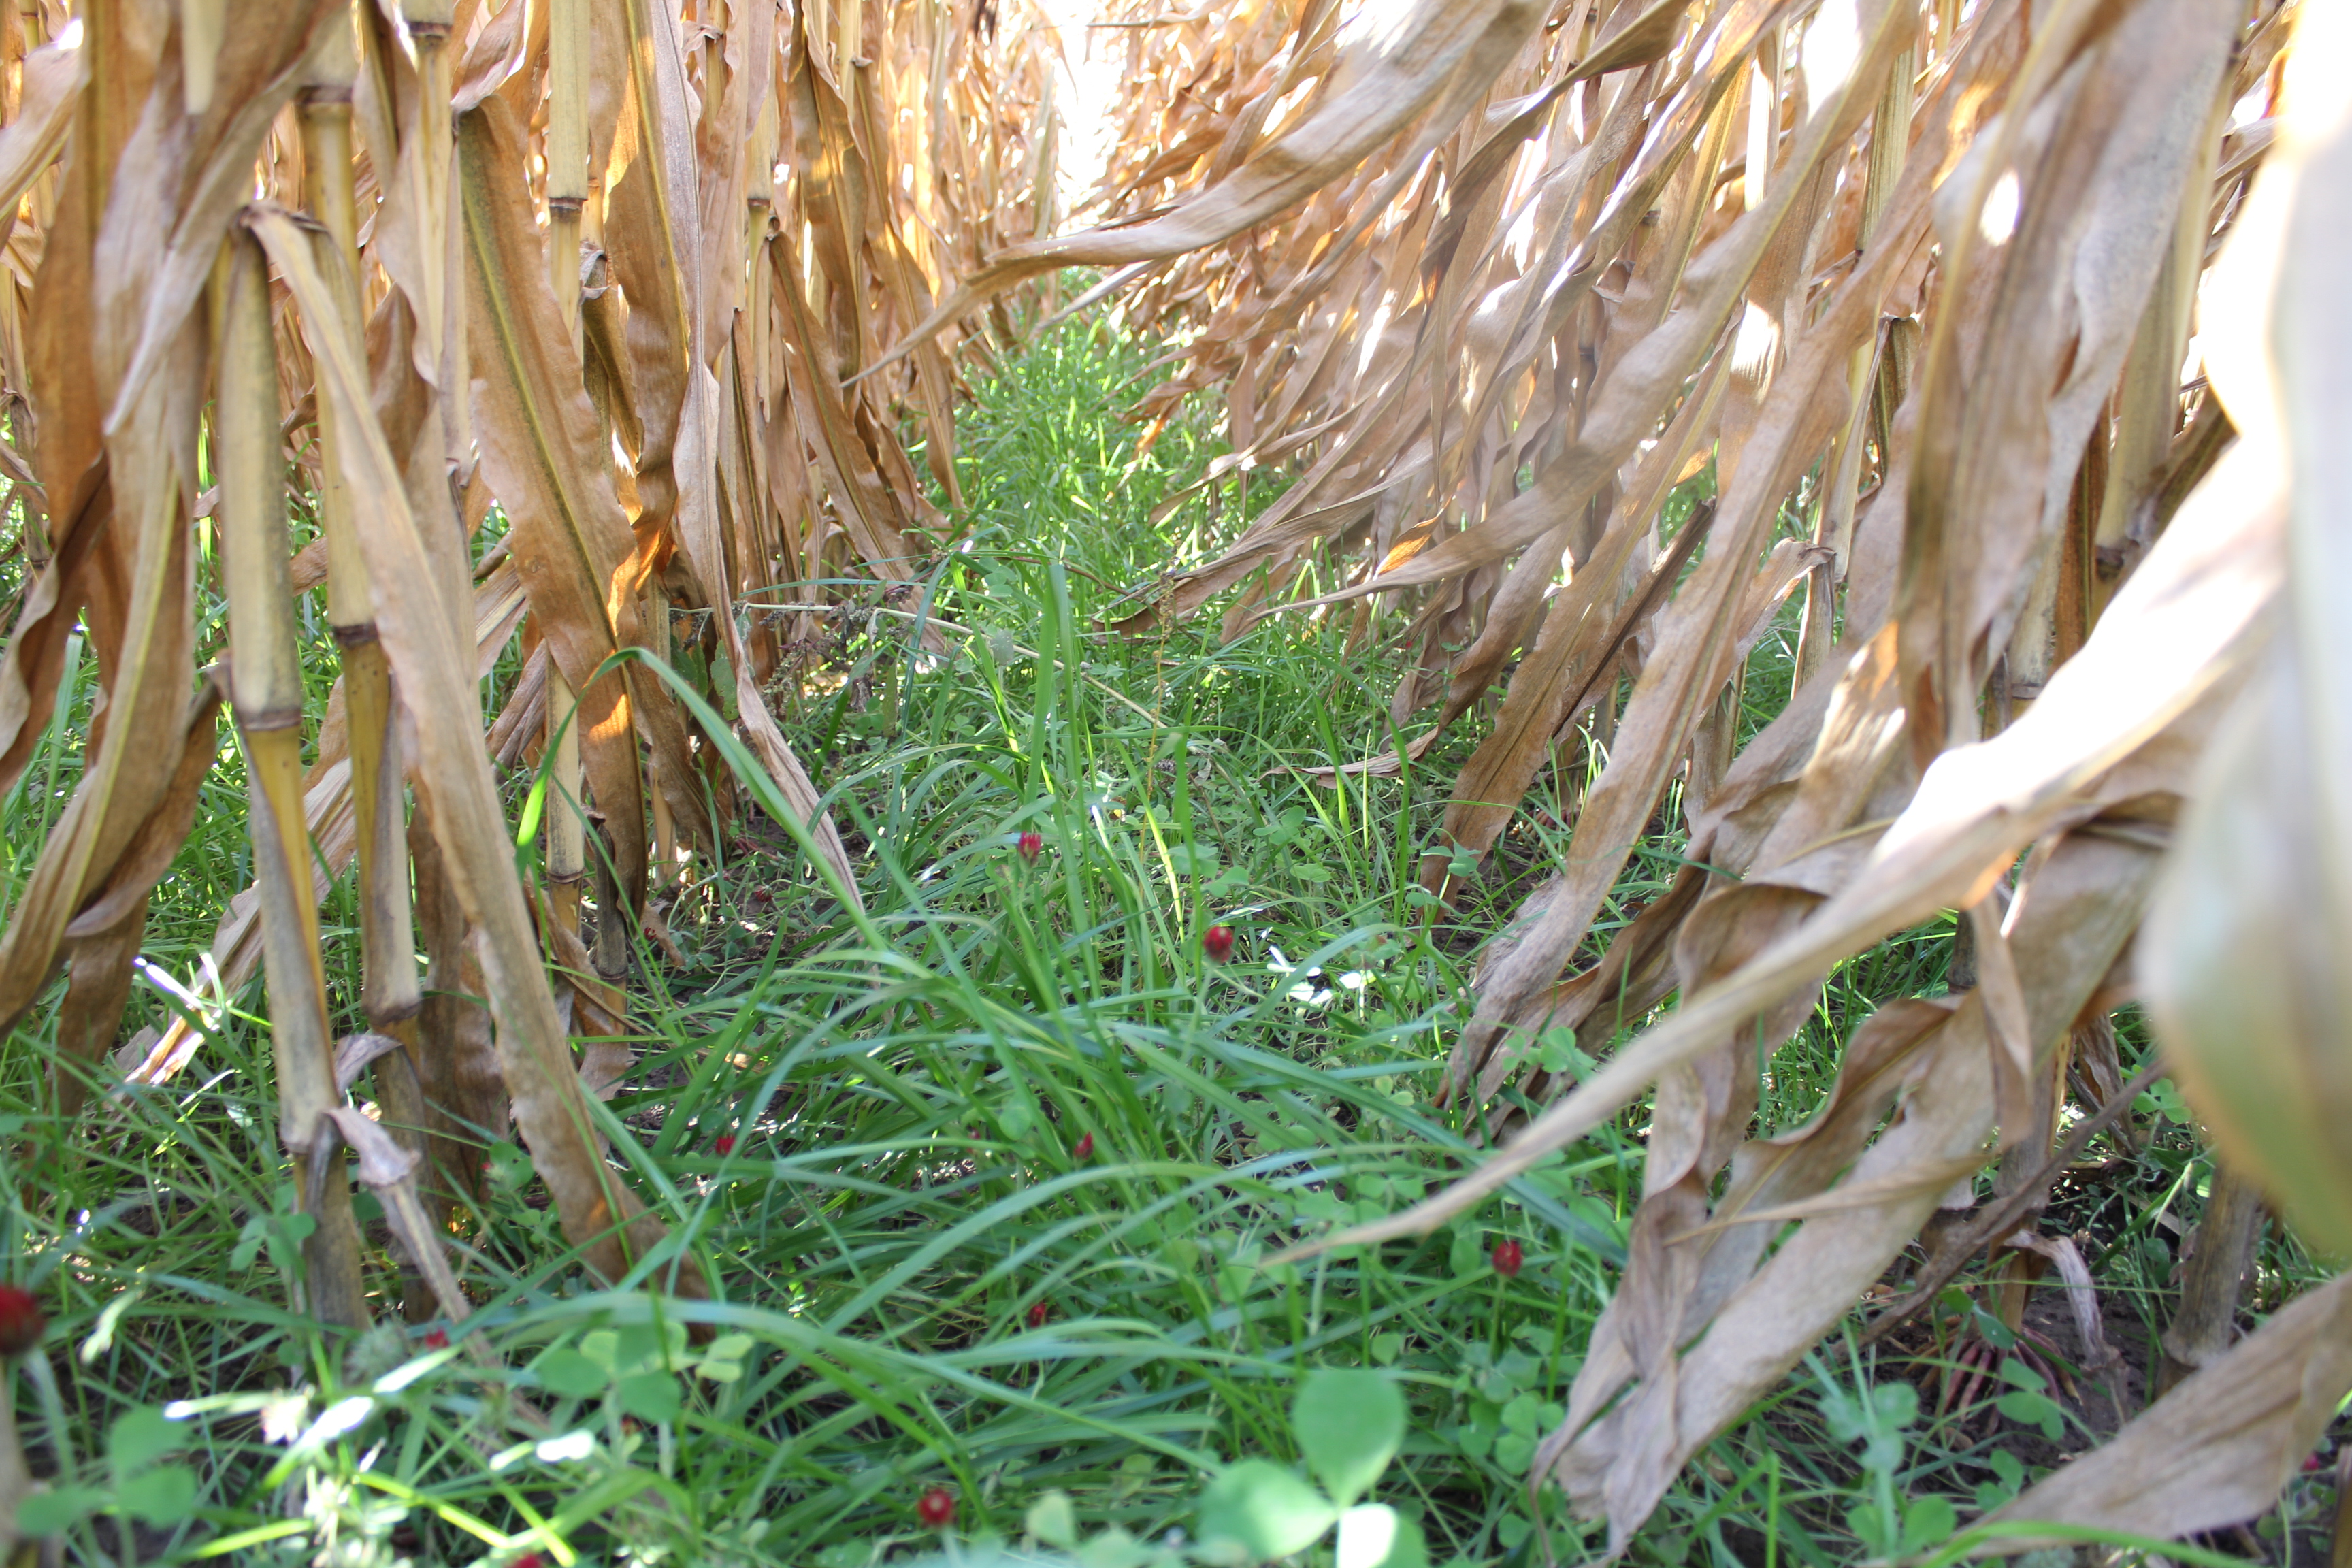 Annual Rye Grass And Clover Sensitivity To Soil Applied Corn Herbicides Field Crop News,Prayer Shawl